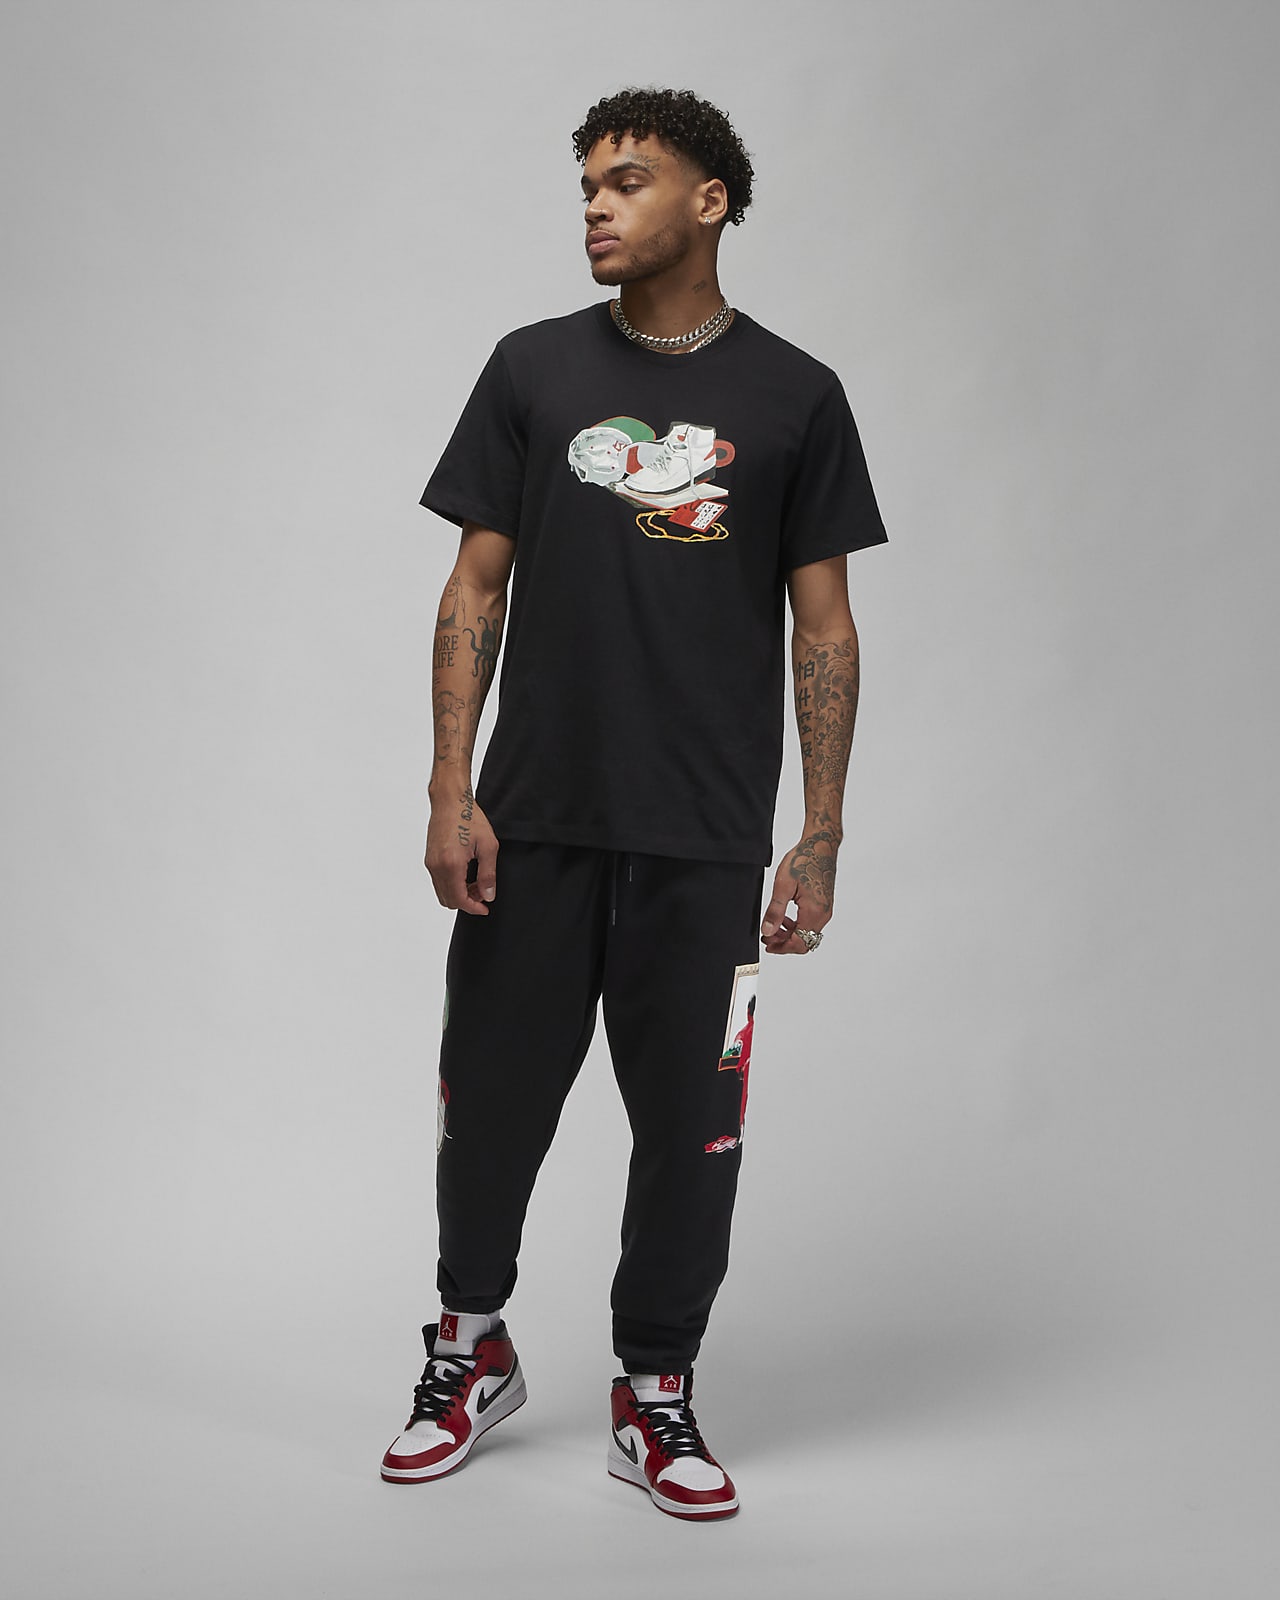 Jordan Artist Series by Jacob Rochester Men's Fleece Pants. Nike.com